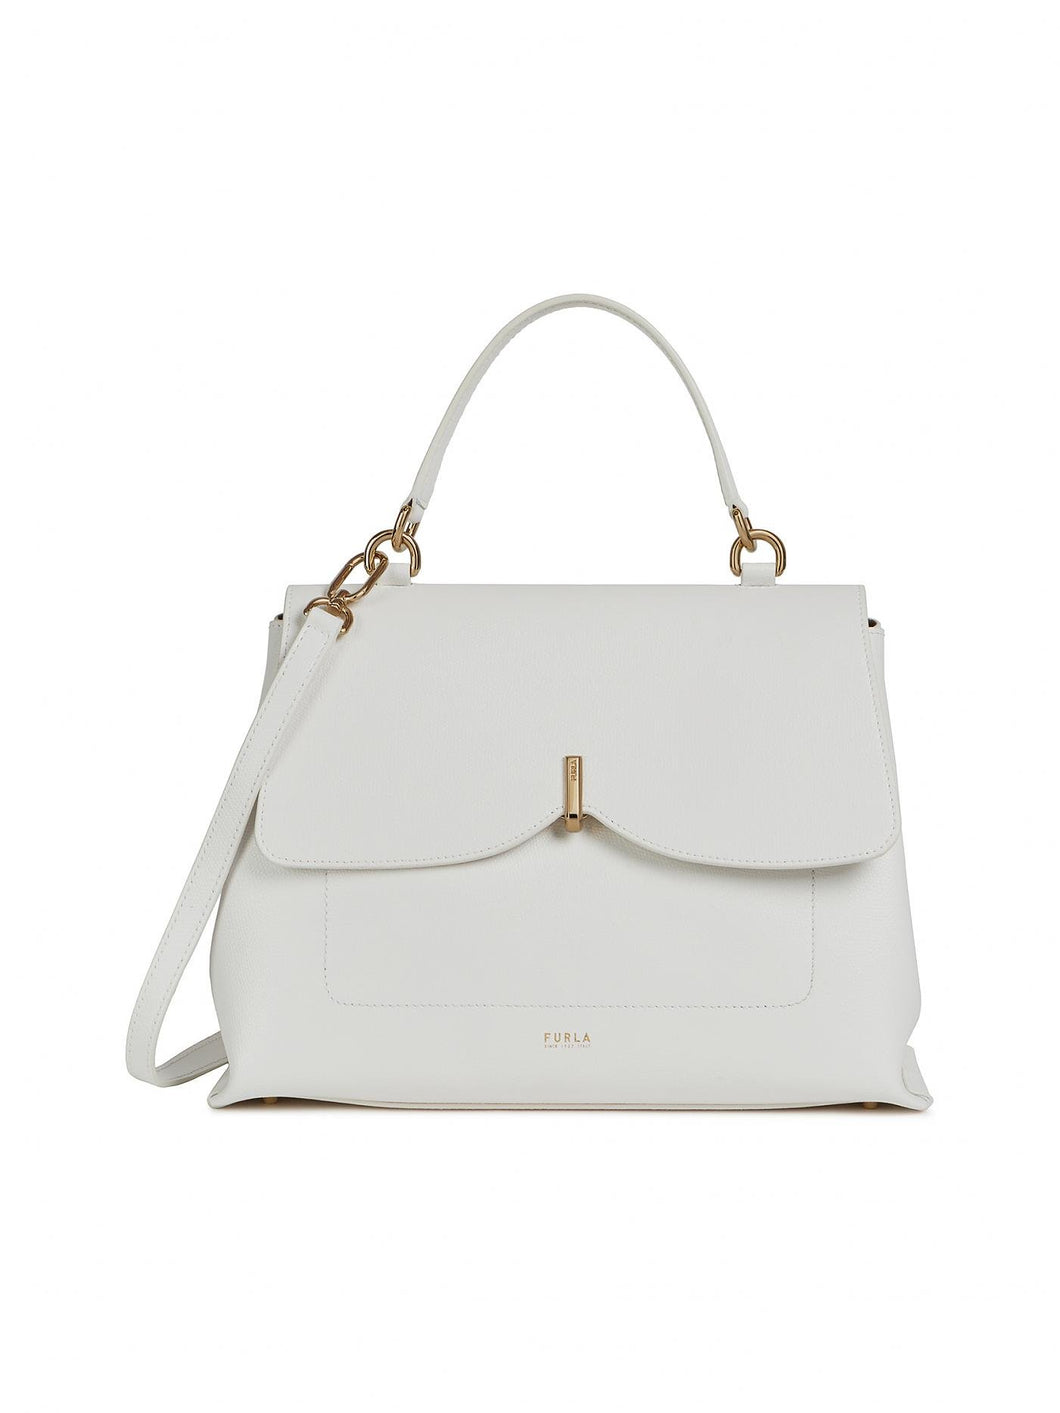 NEW FURLA Women's Ribbon White Leather Shoulder Bag MSRP $449